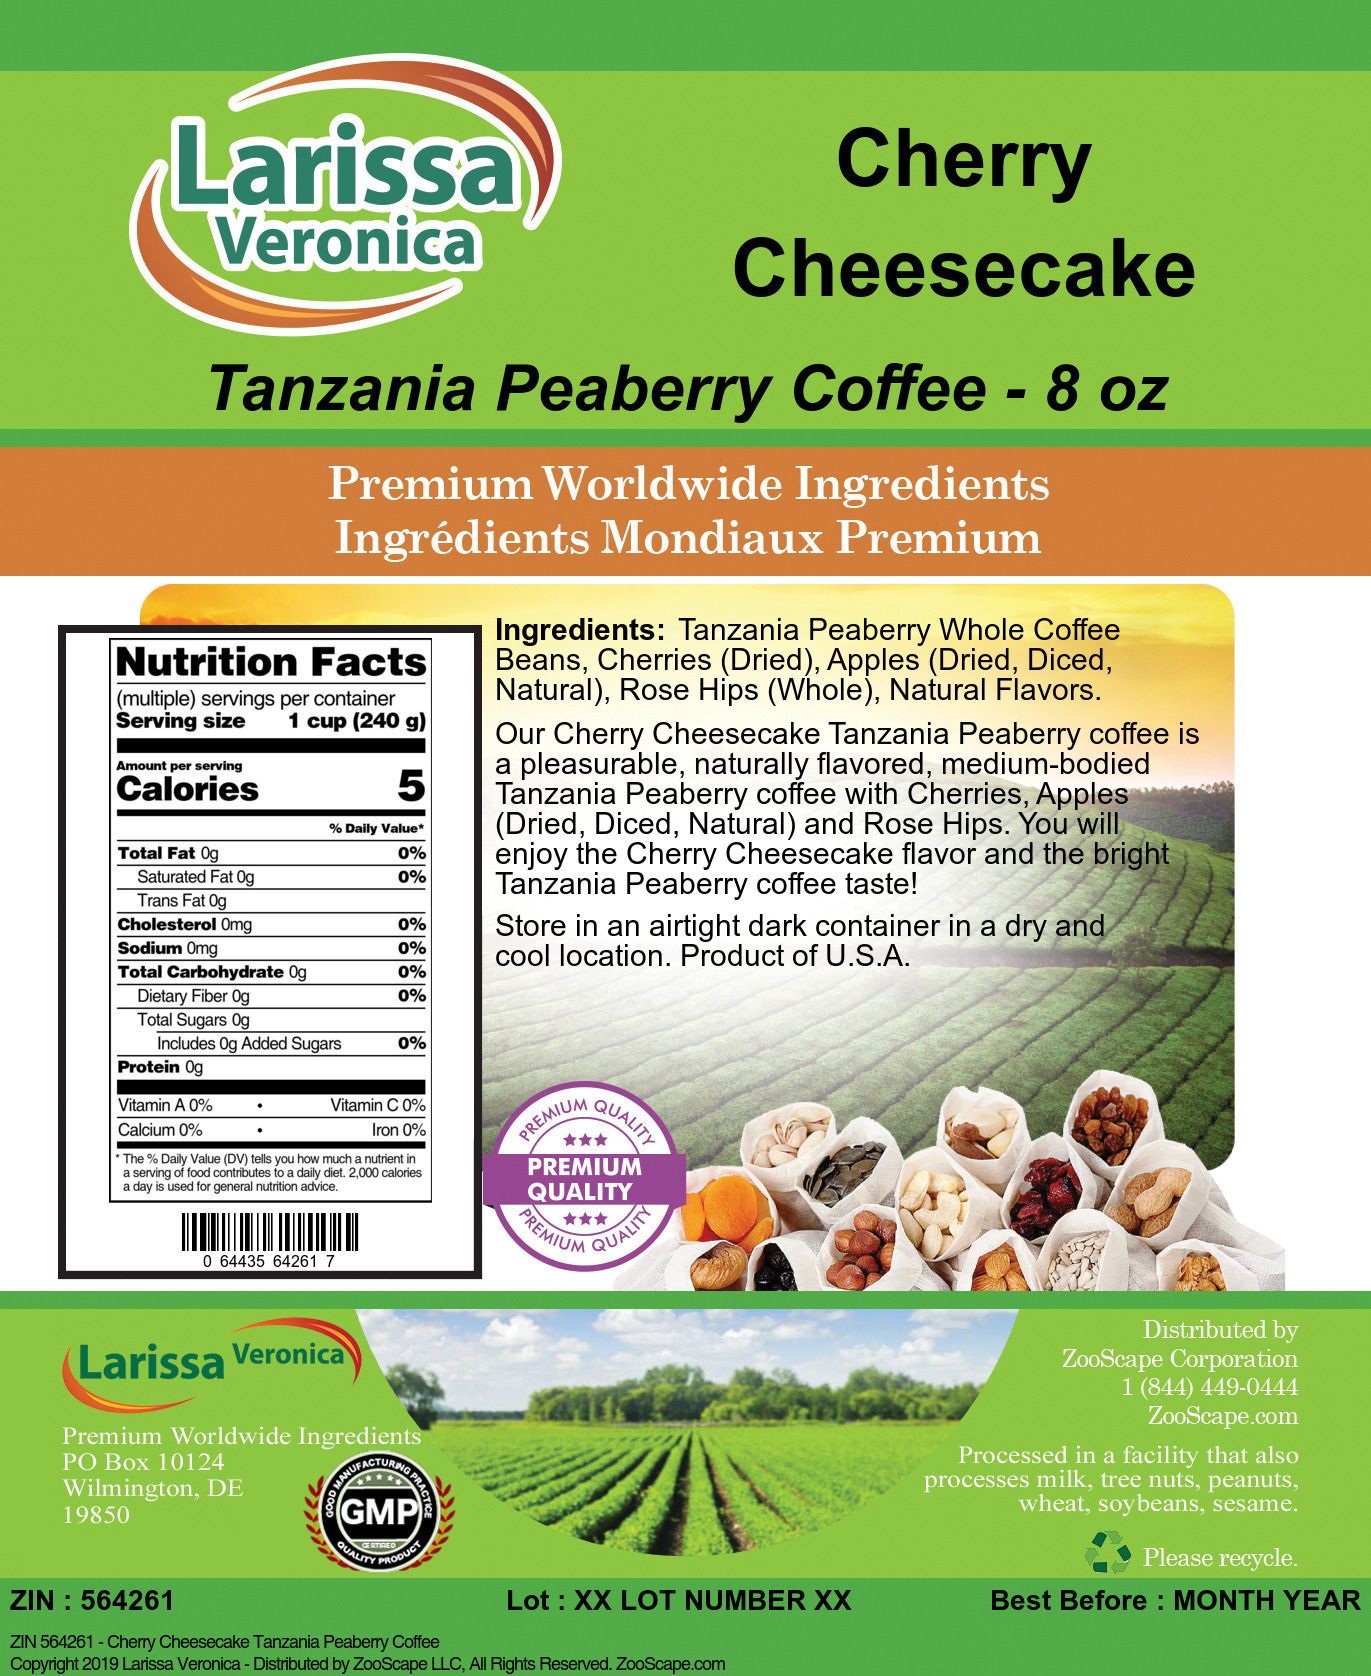 Cherry Cheesecake Tanzania Peaberry Coffee - Label